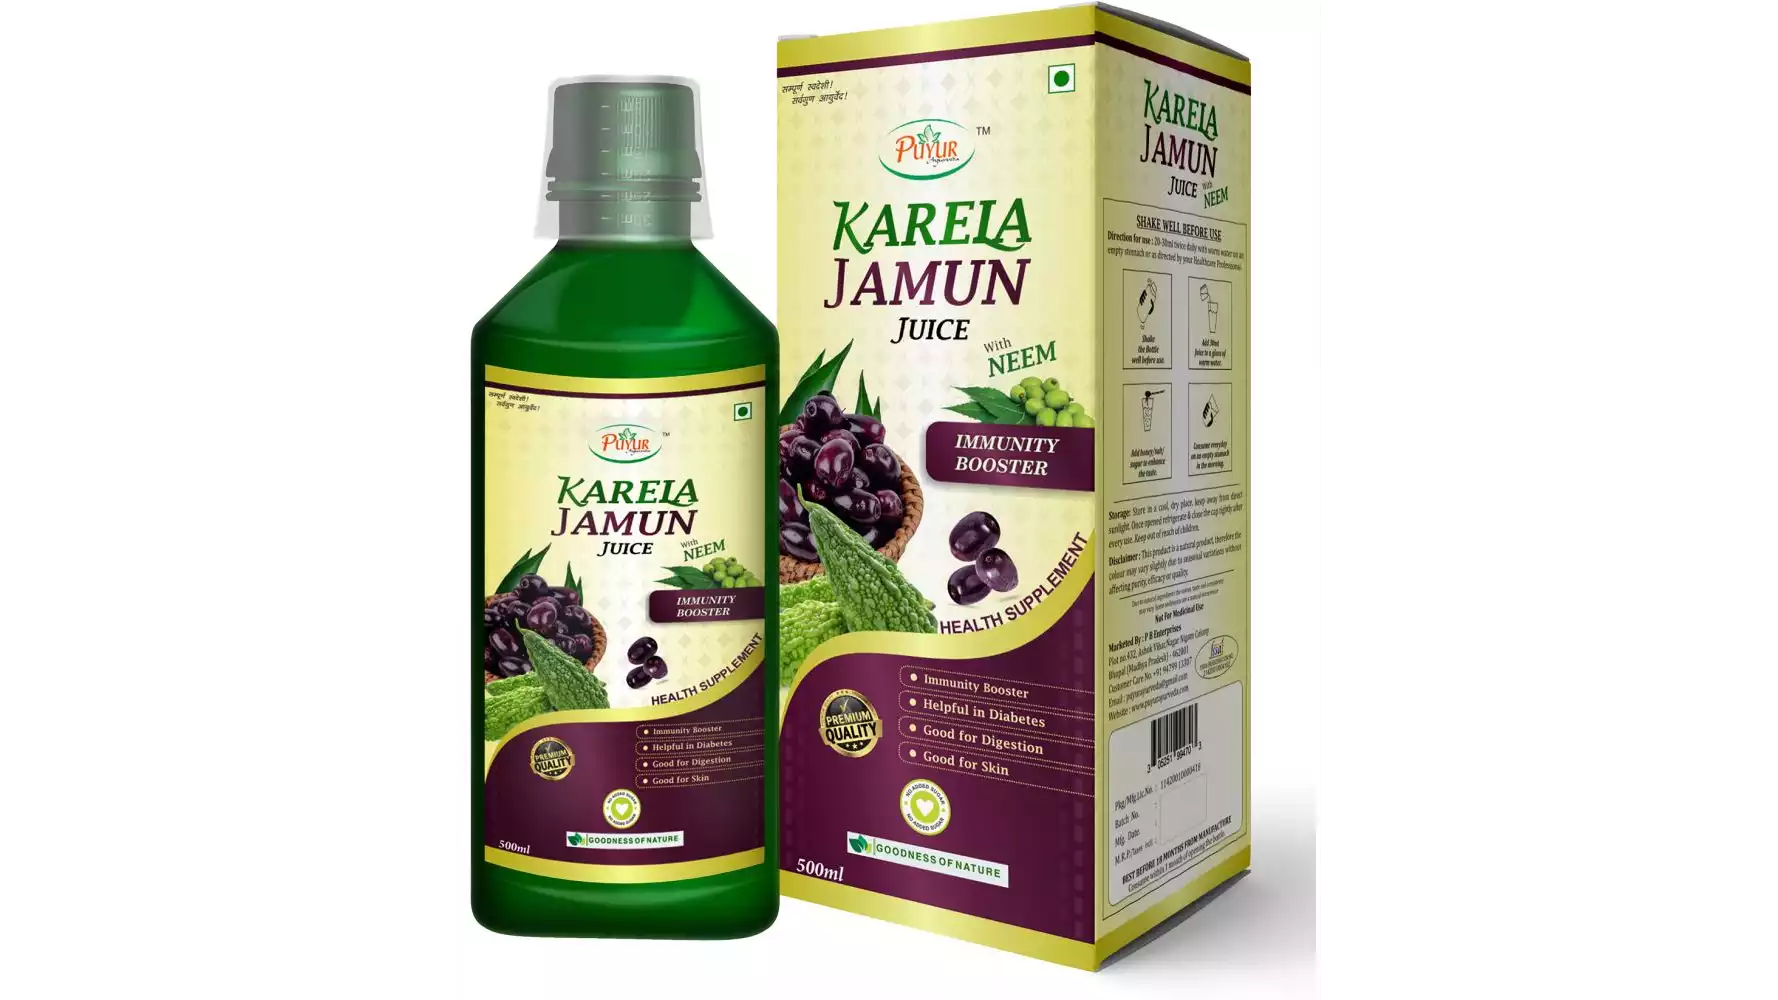 Puyur Ayurveda Neem Karela Jamun Juice (500ml)